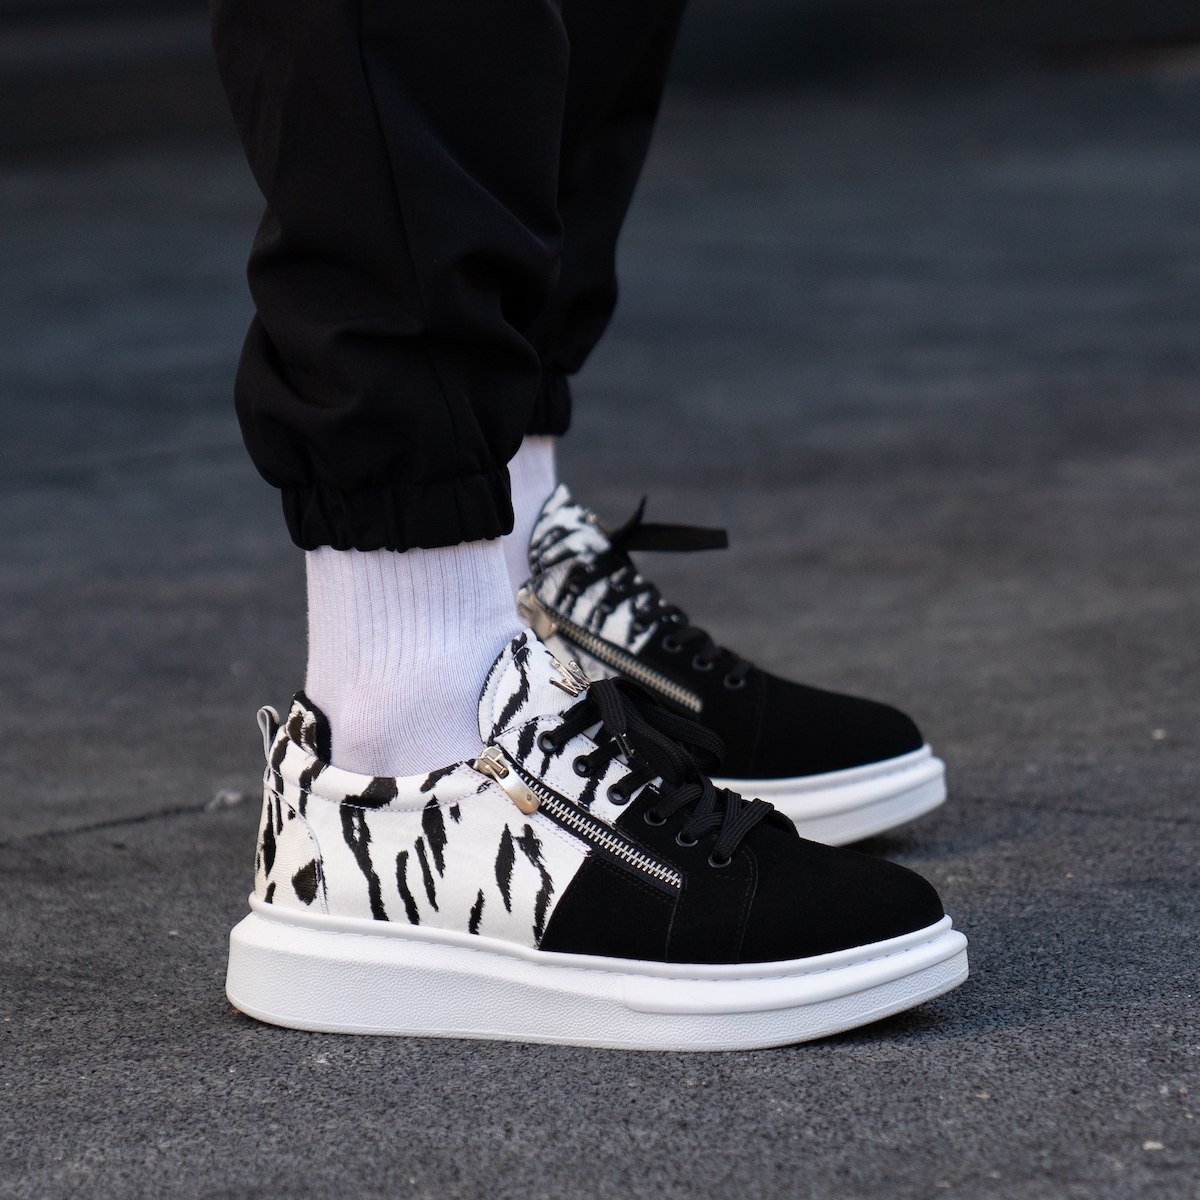 Hype Sole Zipped Style Sneakers in Black Suede Zebra Design - 1